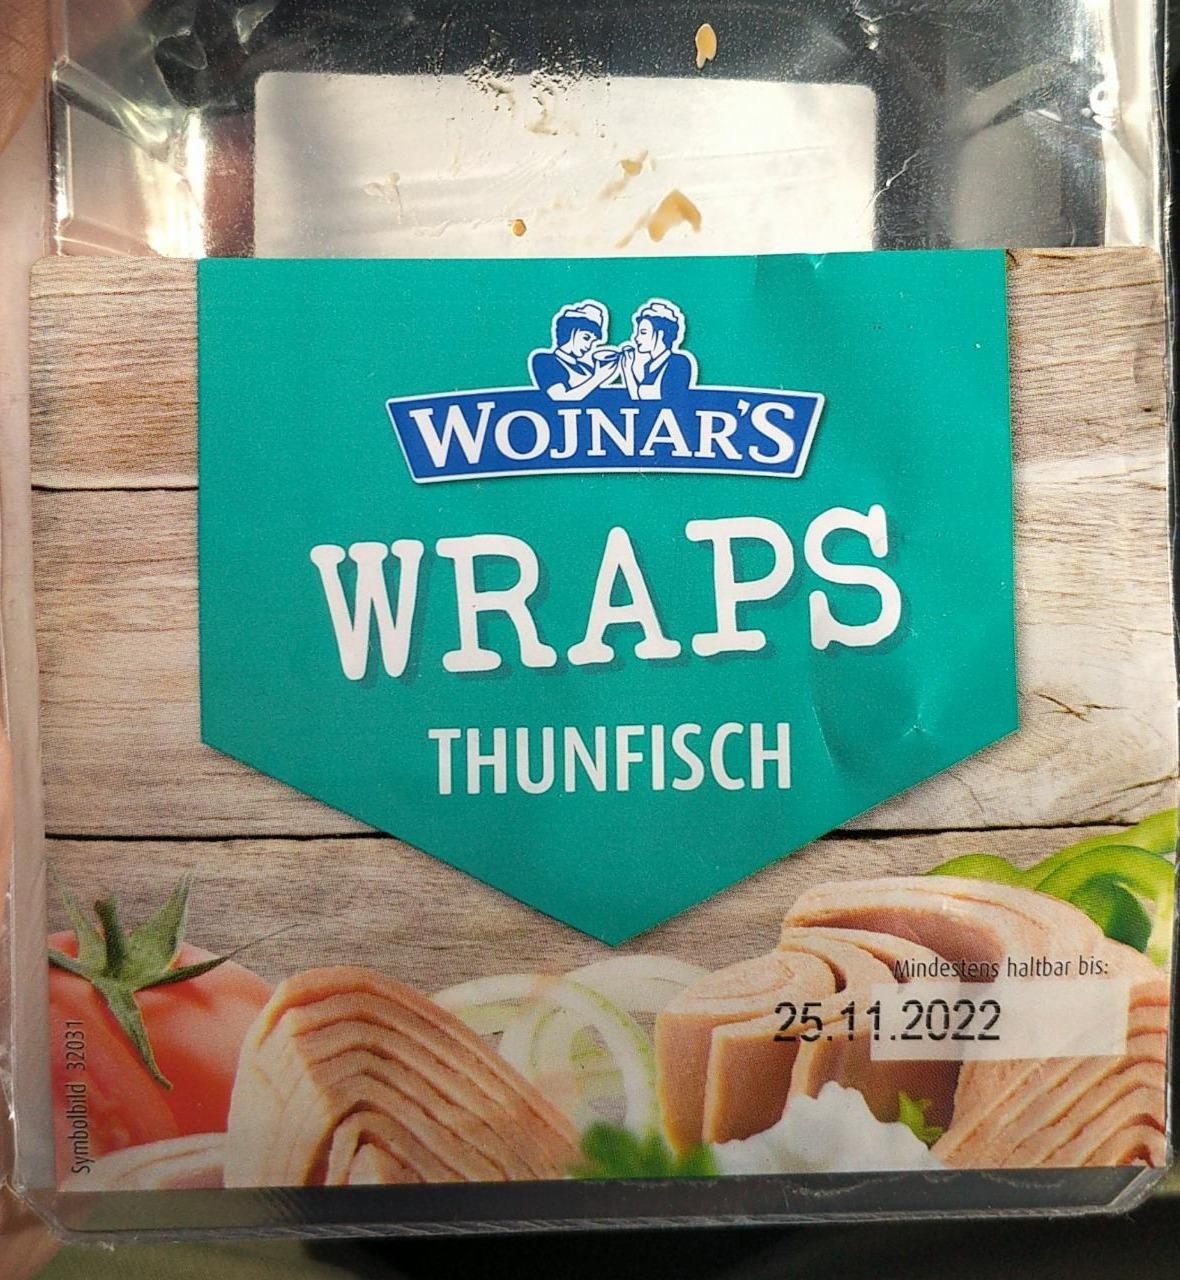 Fotografie - Wraps Thunfisch Wojnar's